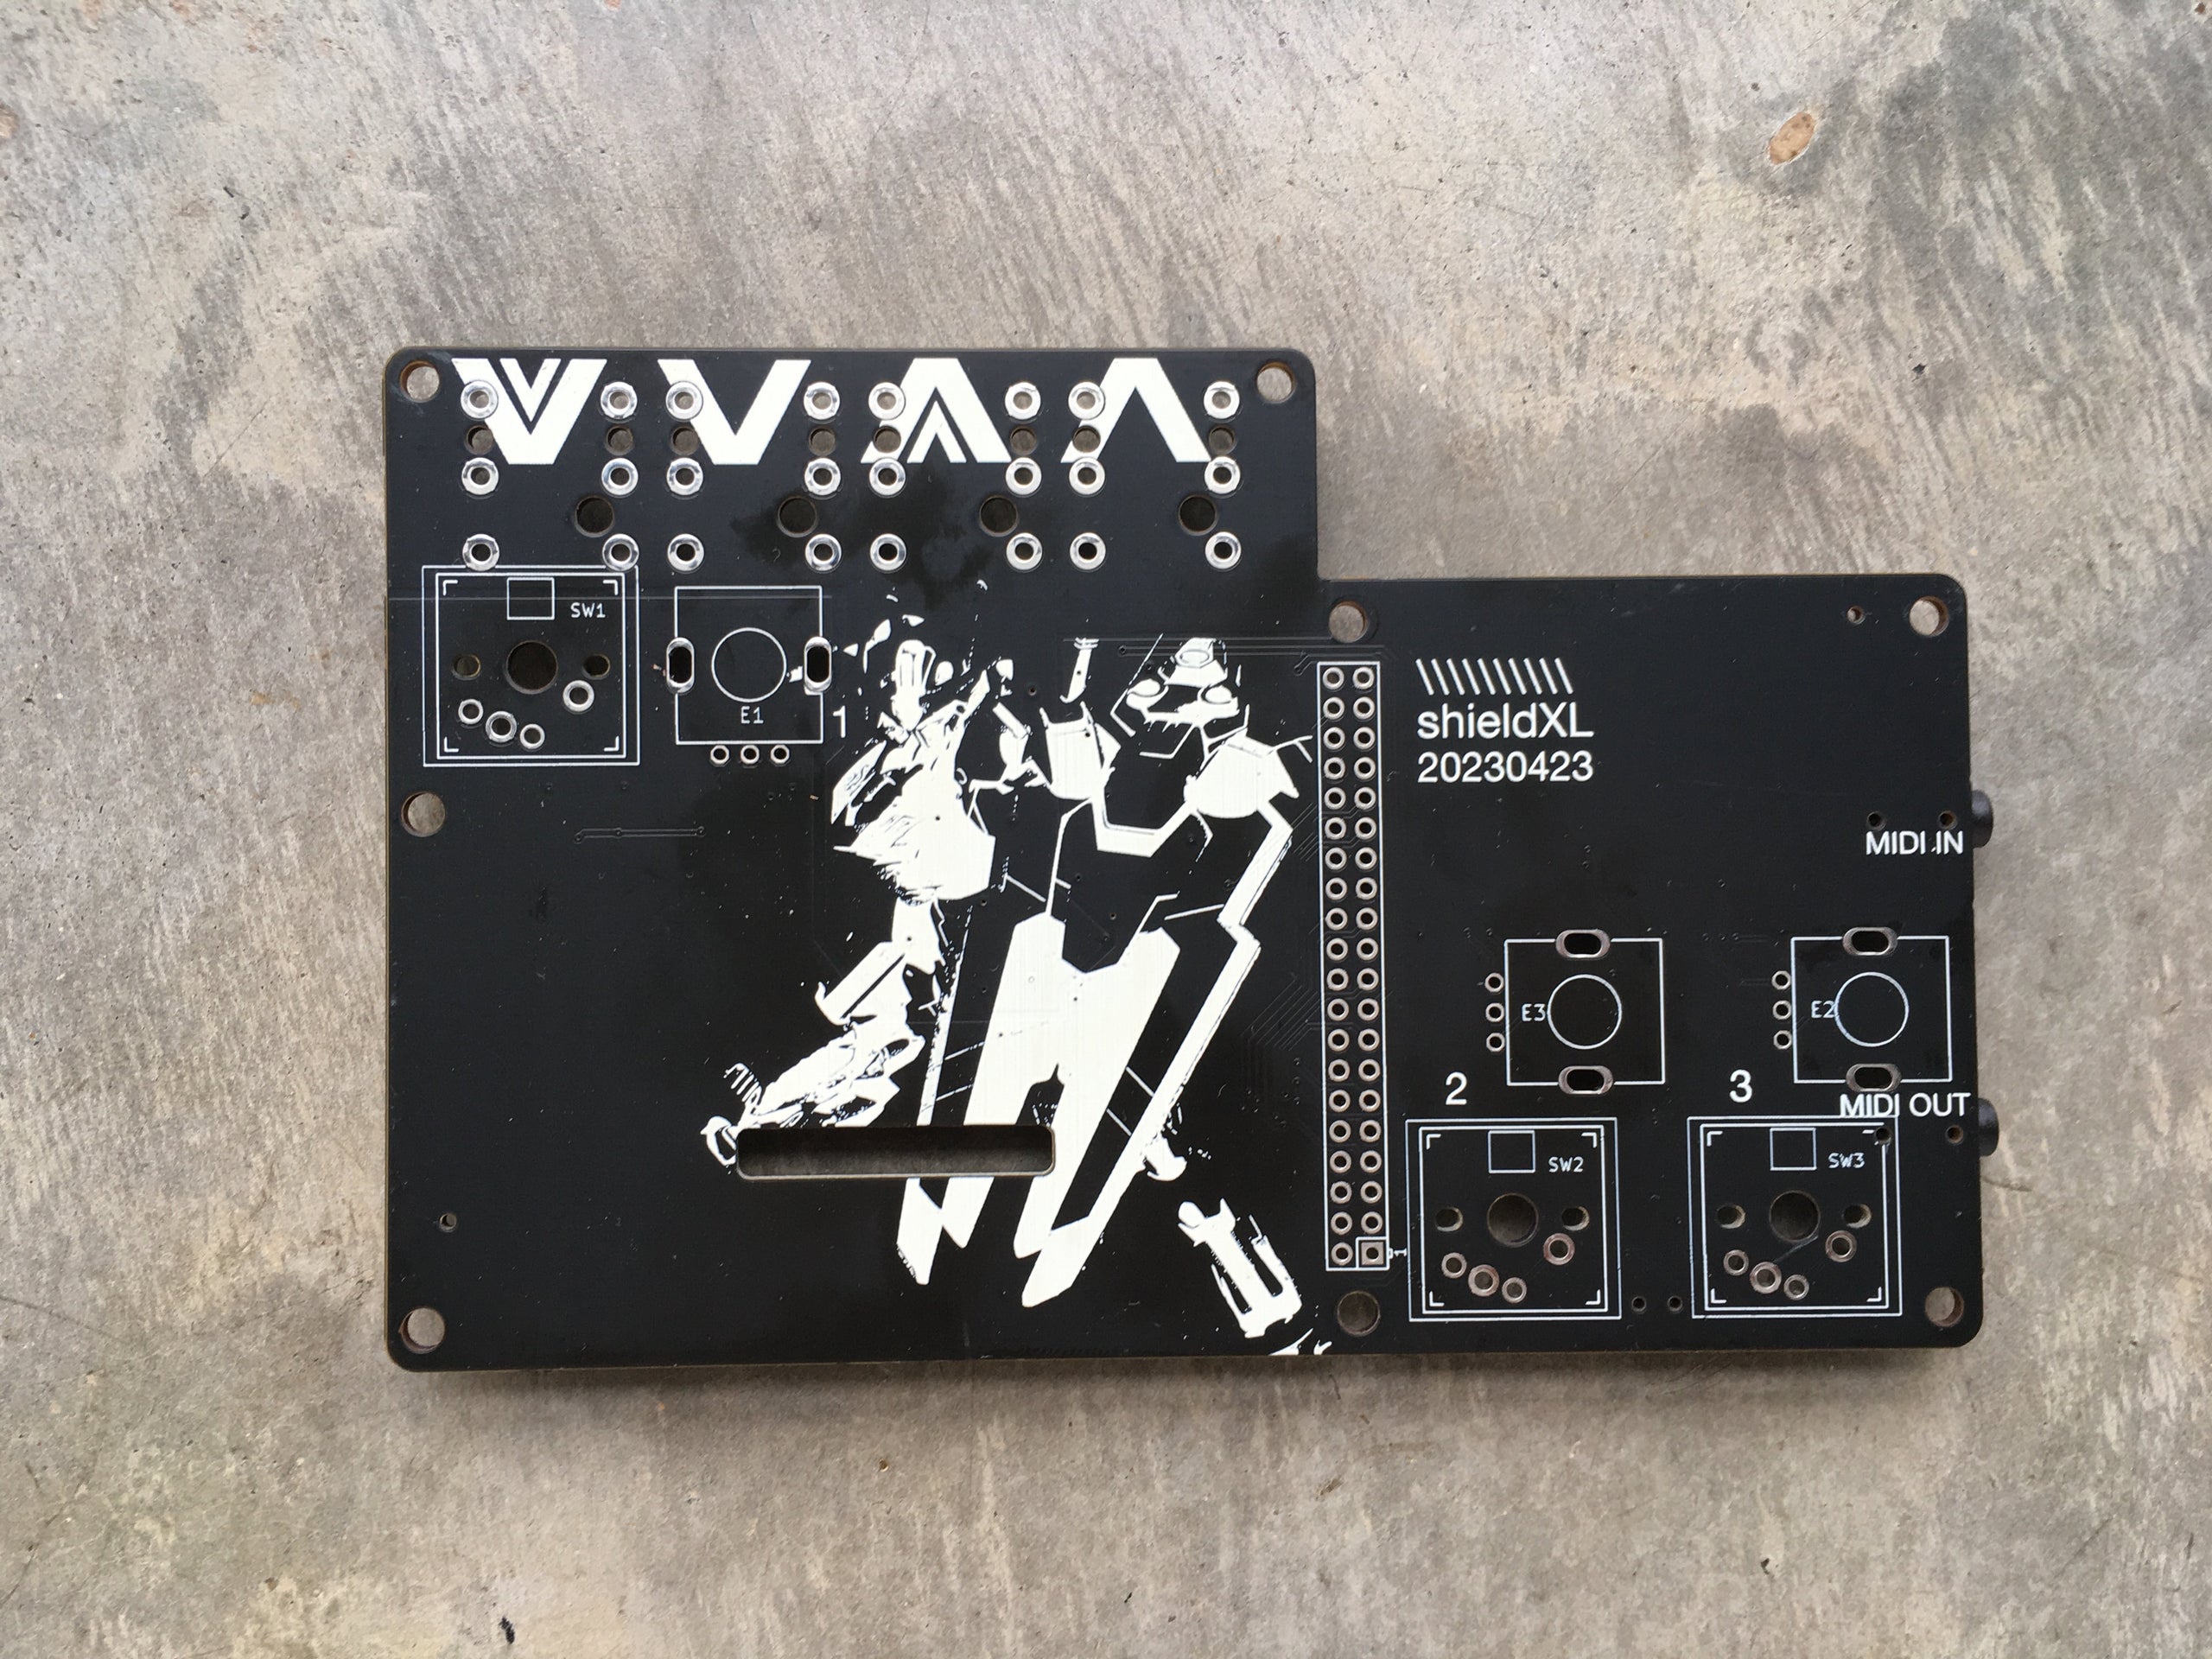 shieldXL (DIY norns synthesizer kit)